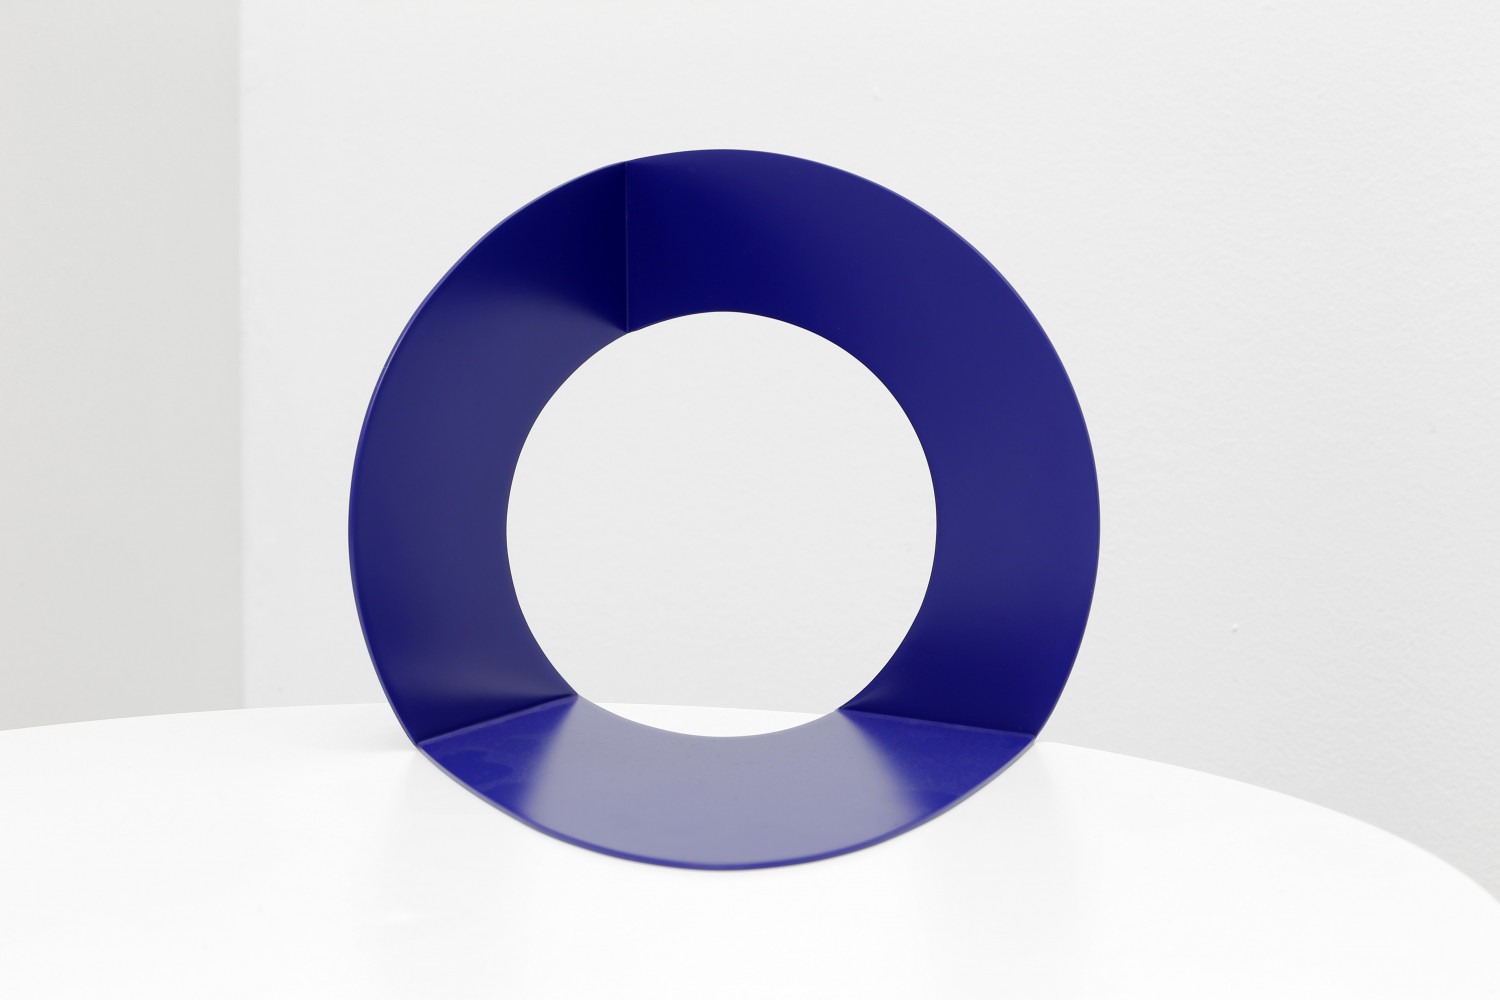 Felice Varini, ‘Cercle bleu’, 0013–2013,  Raw iron sheet laser cut and painted blue